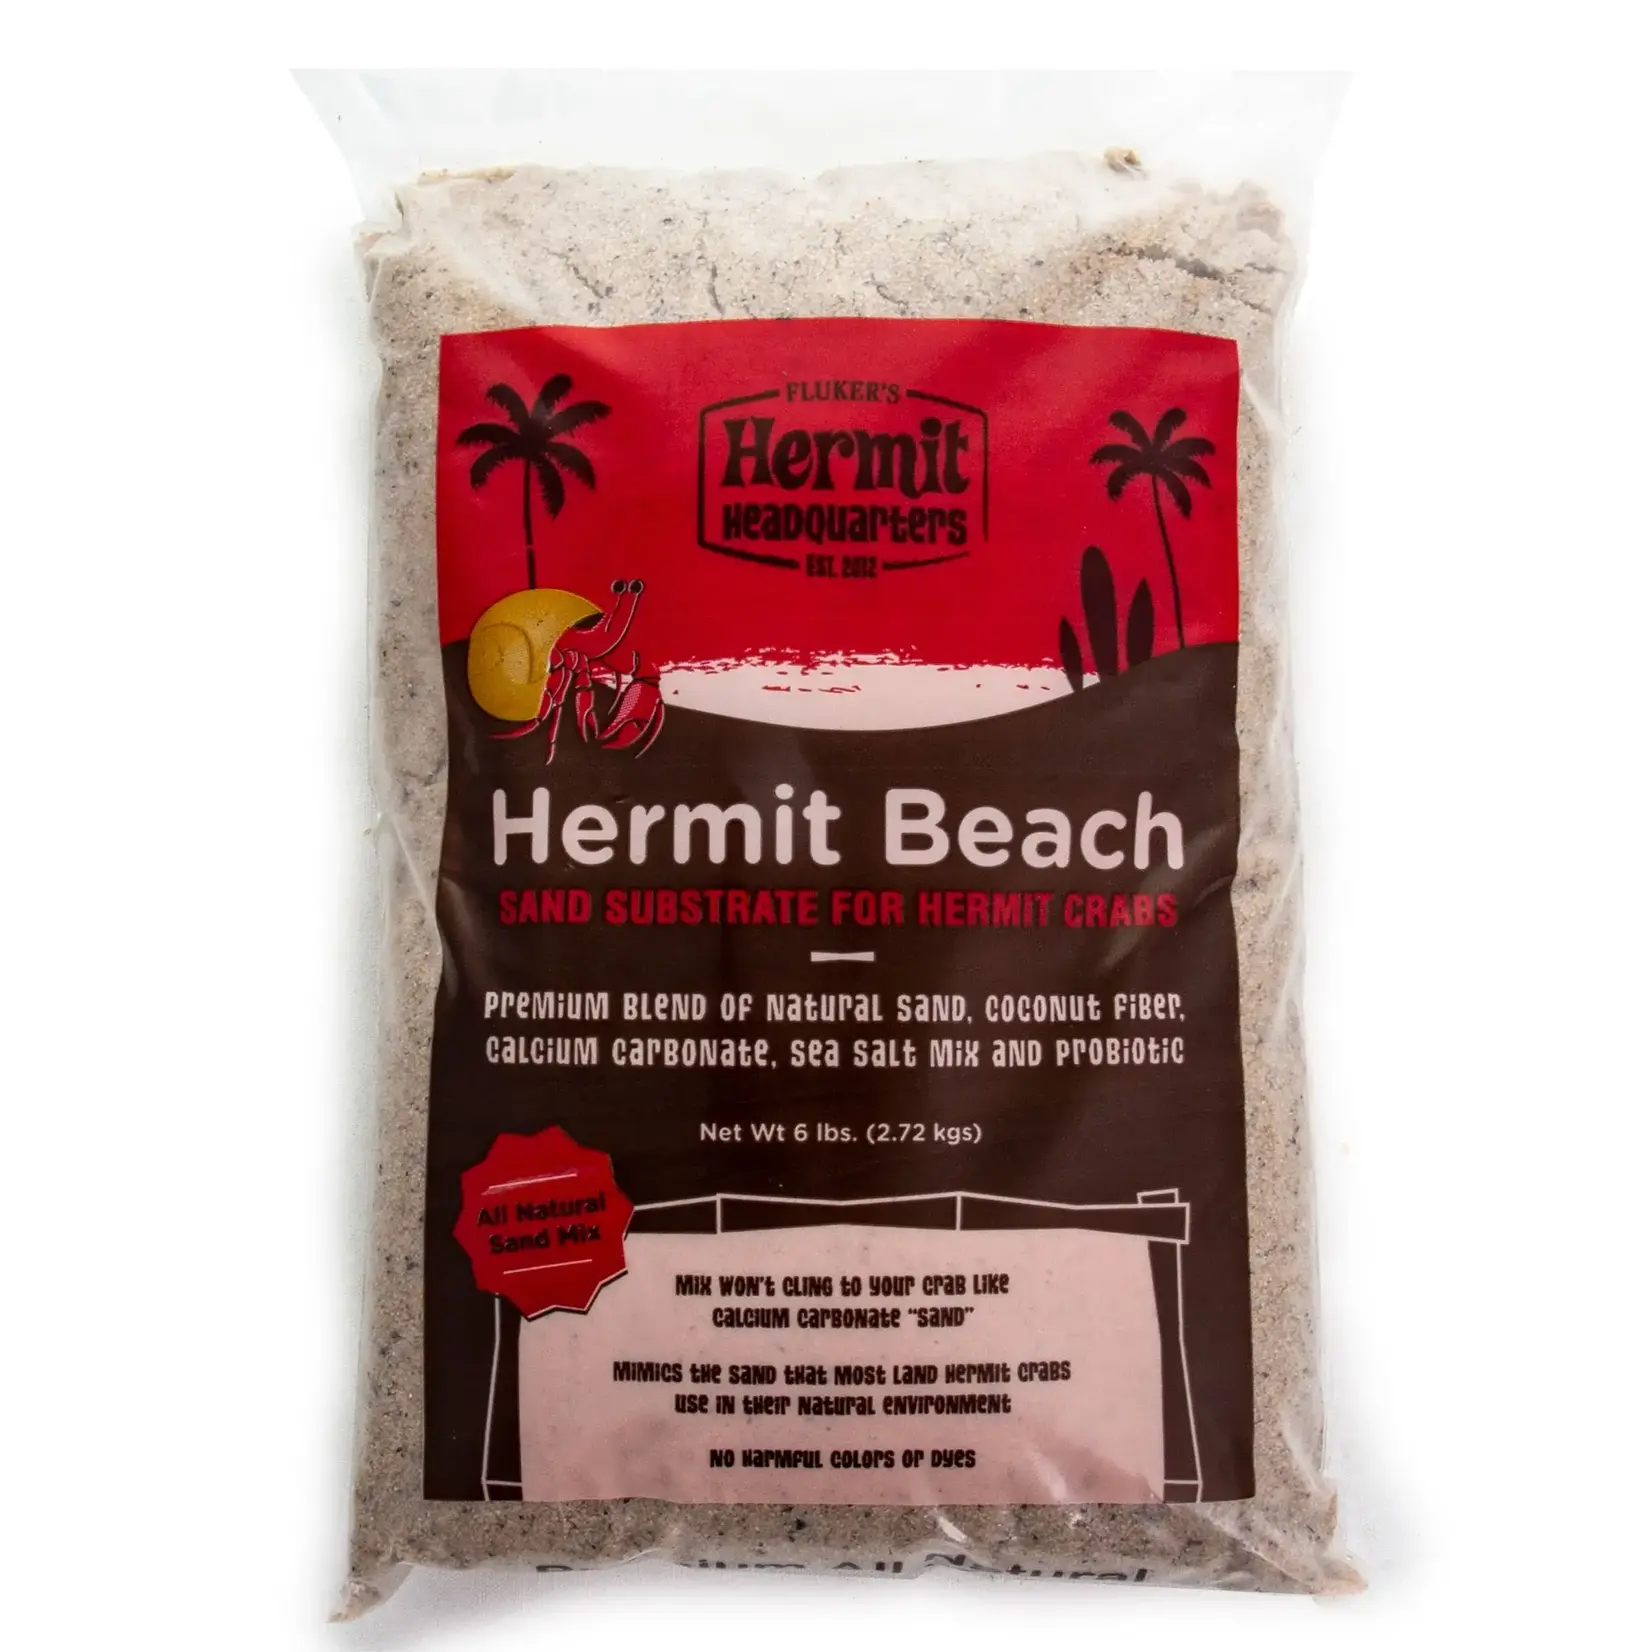 Fluker's Hermit Crab Headquarters Hermit Beach Sand 6lb